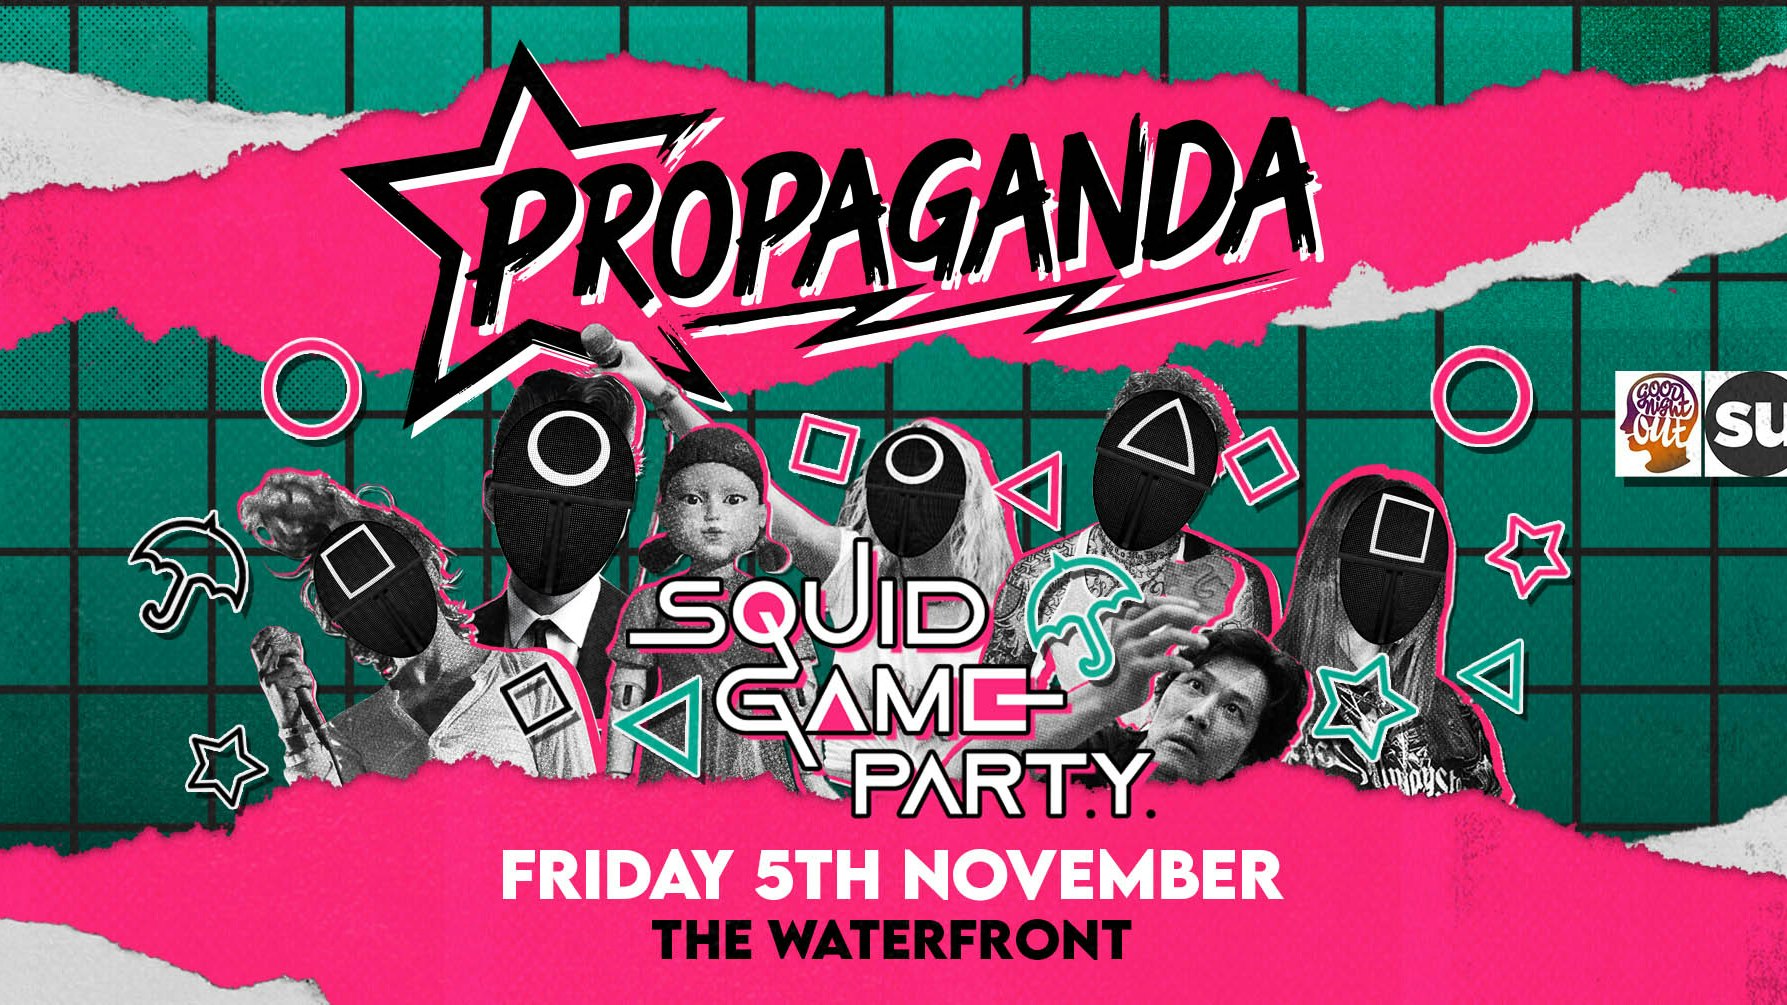 Propaganda Norwich – Squid Game Party!